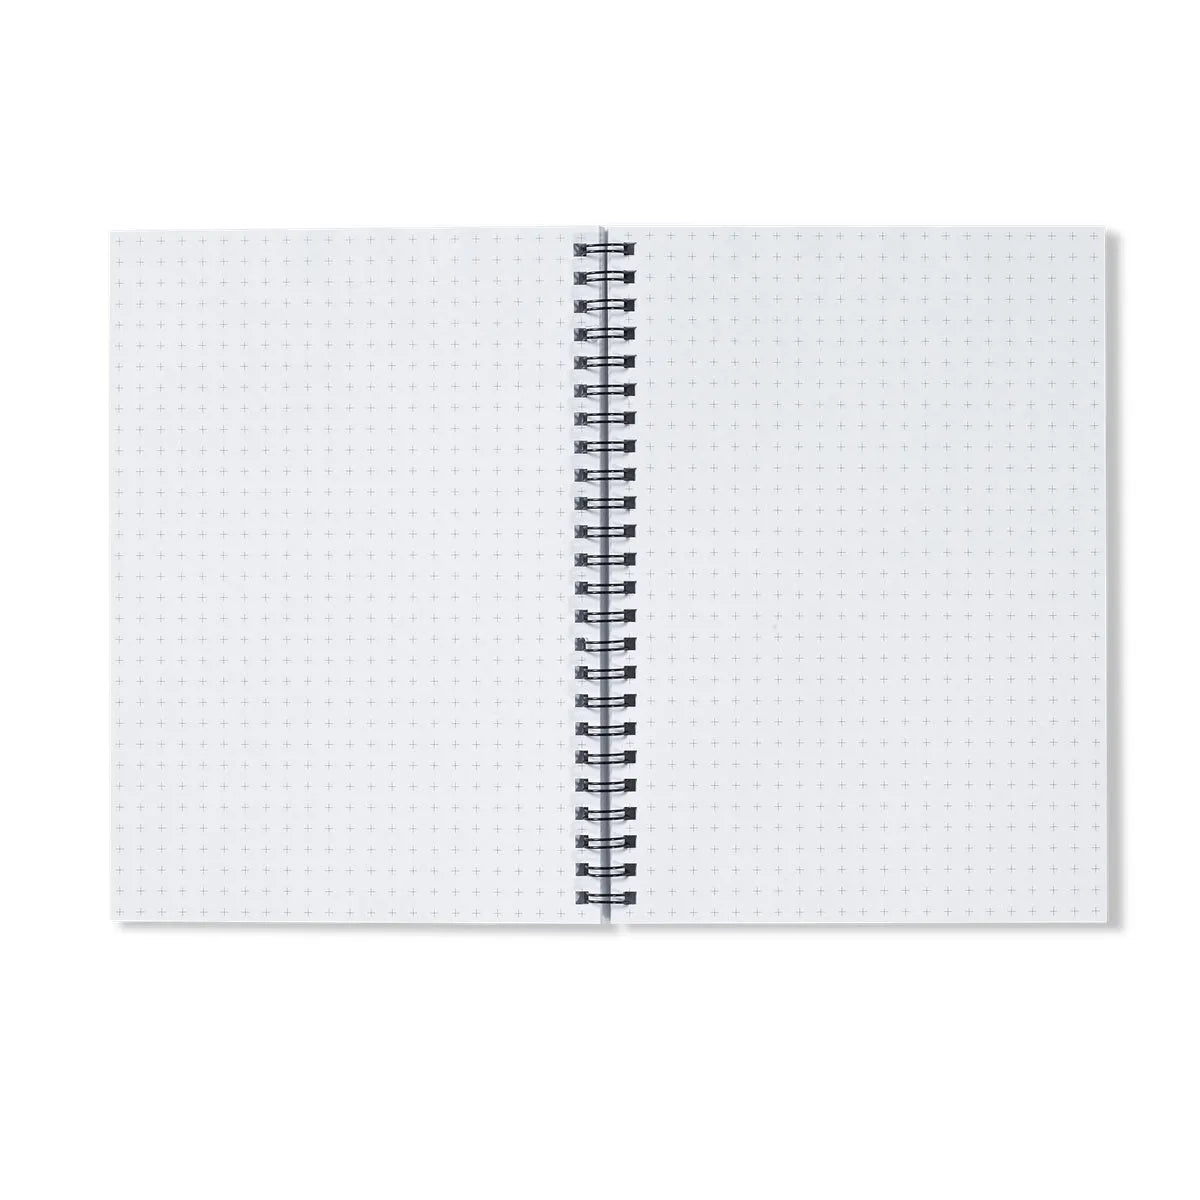 Reach Out Notebook - Notebooks & Notepads - Aesthetic Art